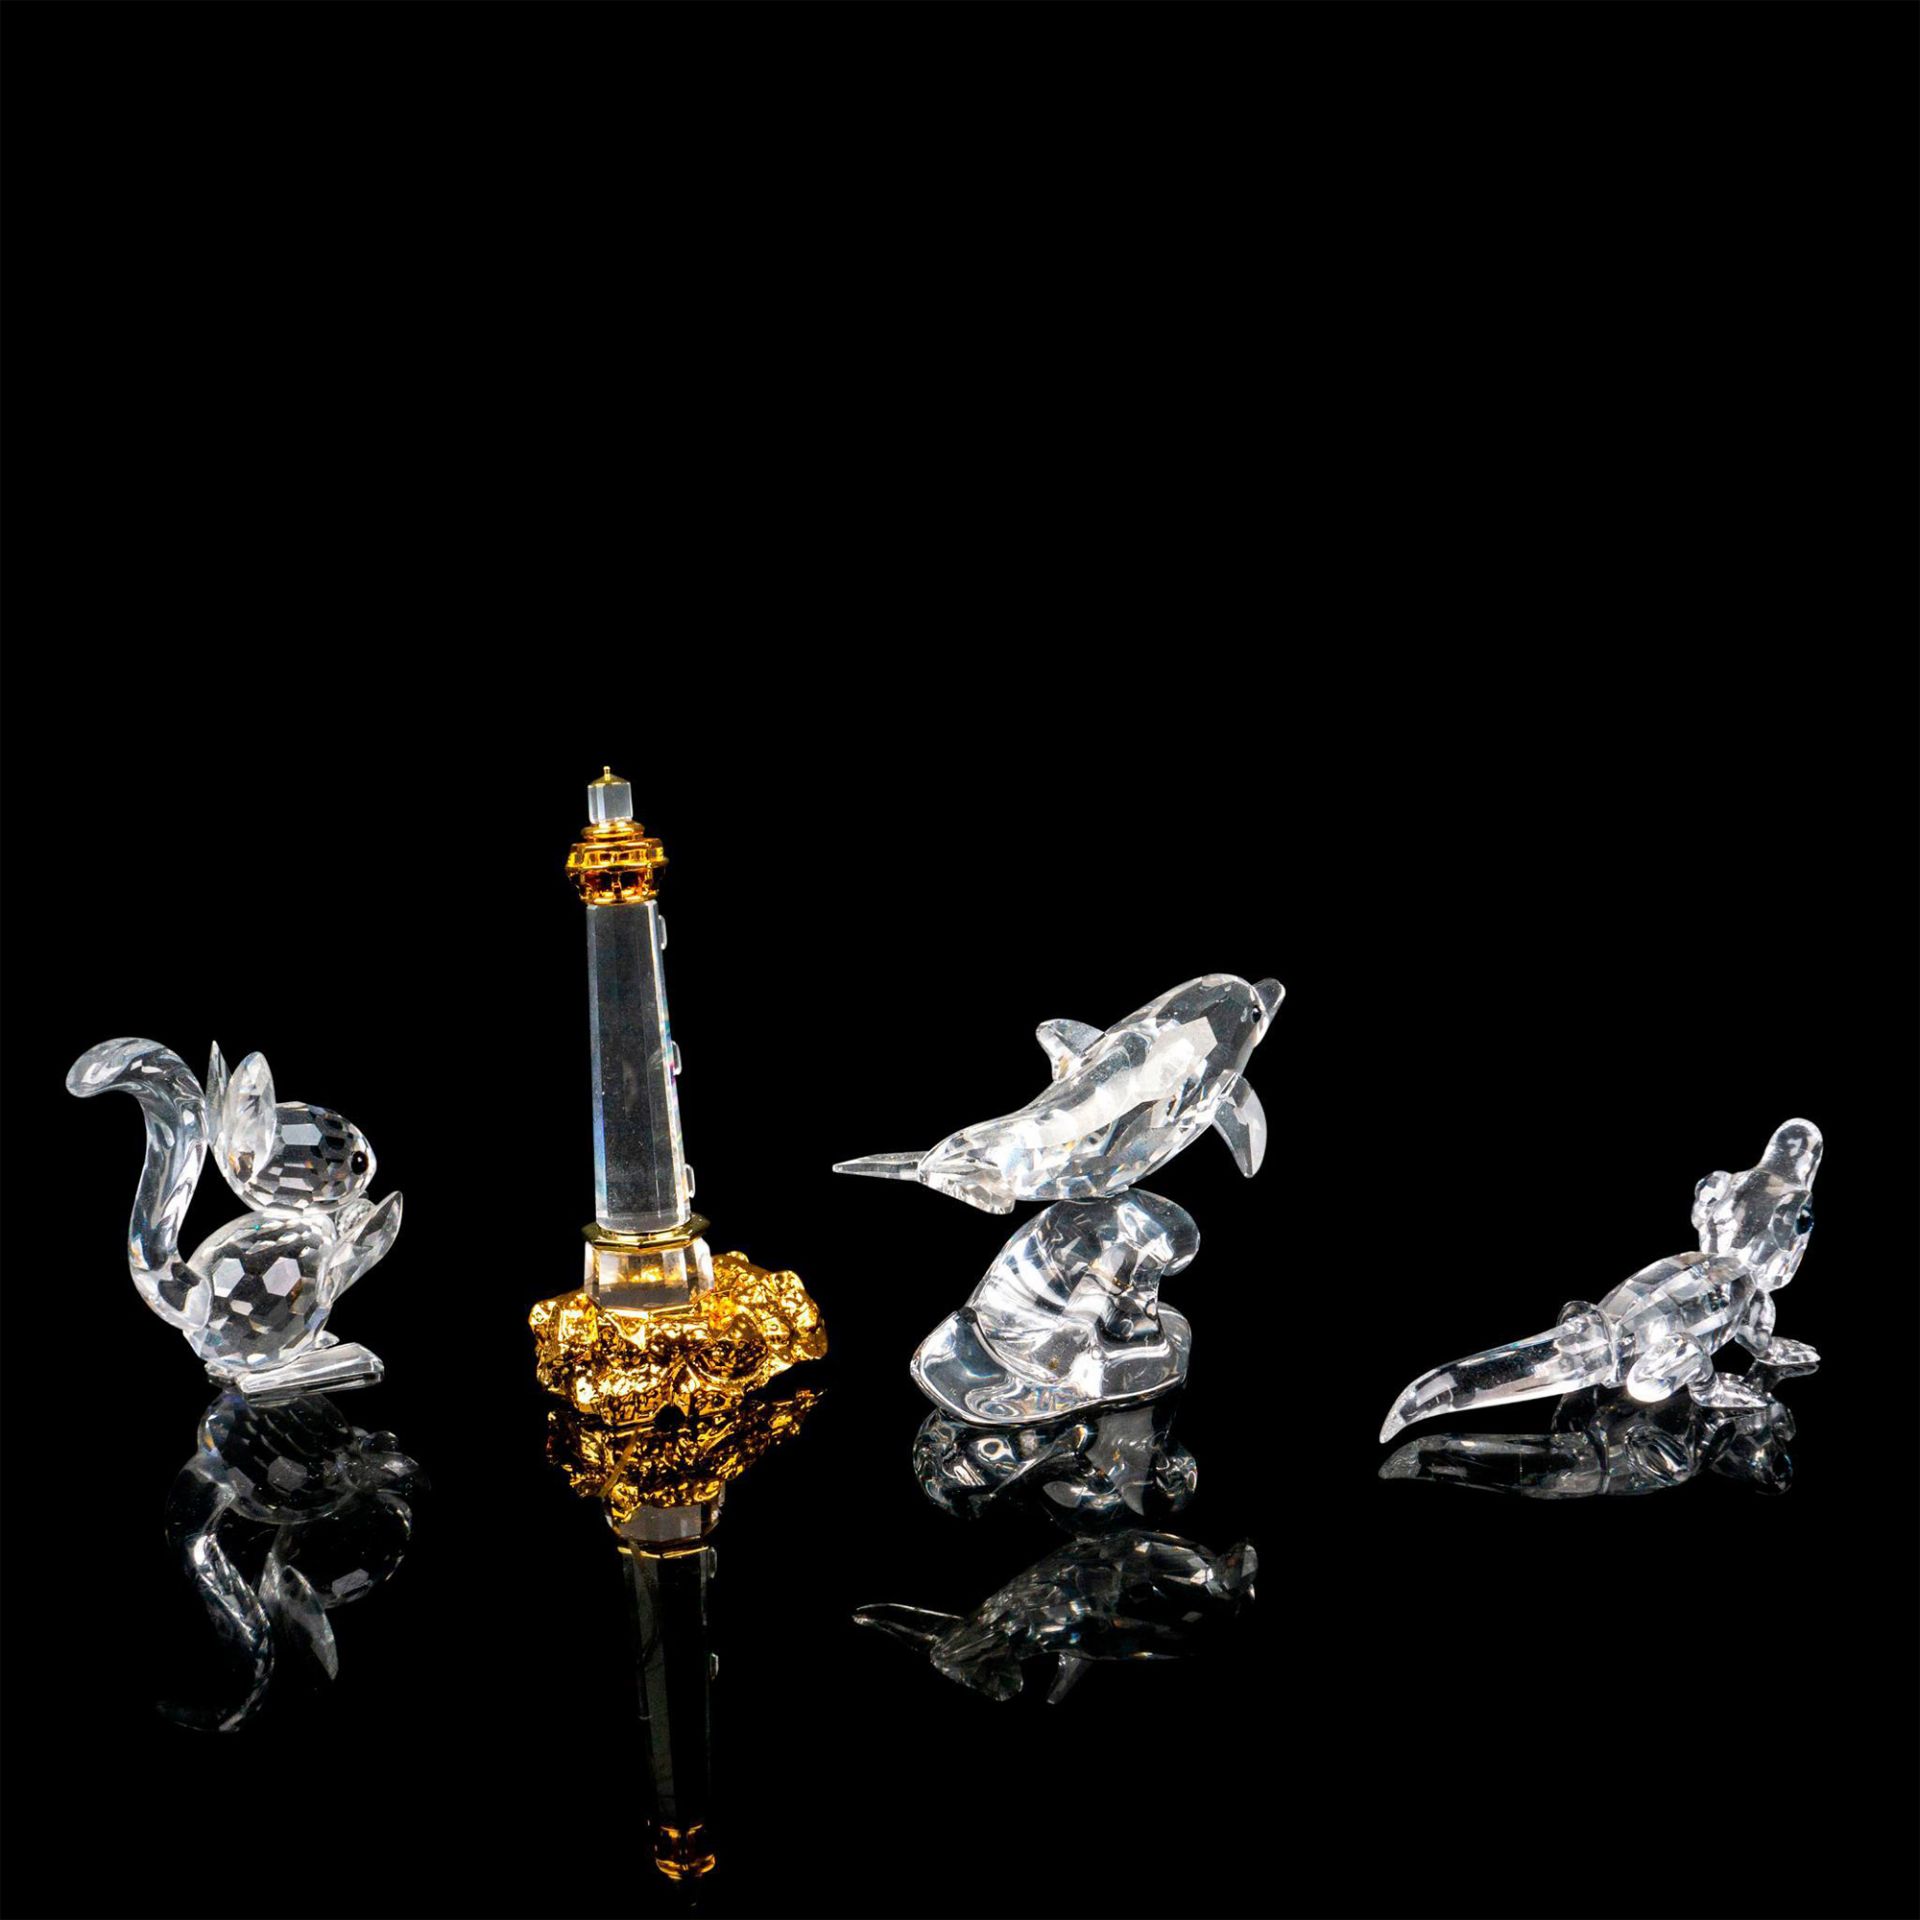 4pc Swarovski Crystal Figurines - Image 2 of 3